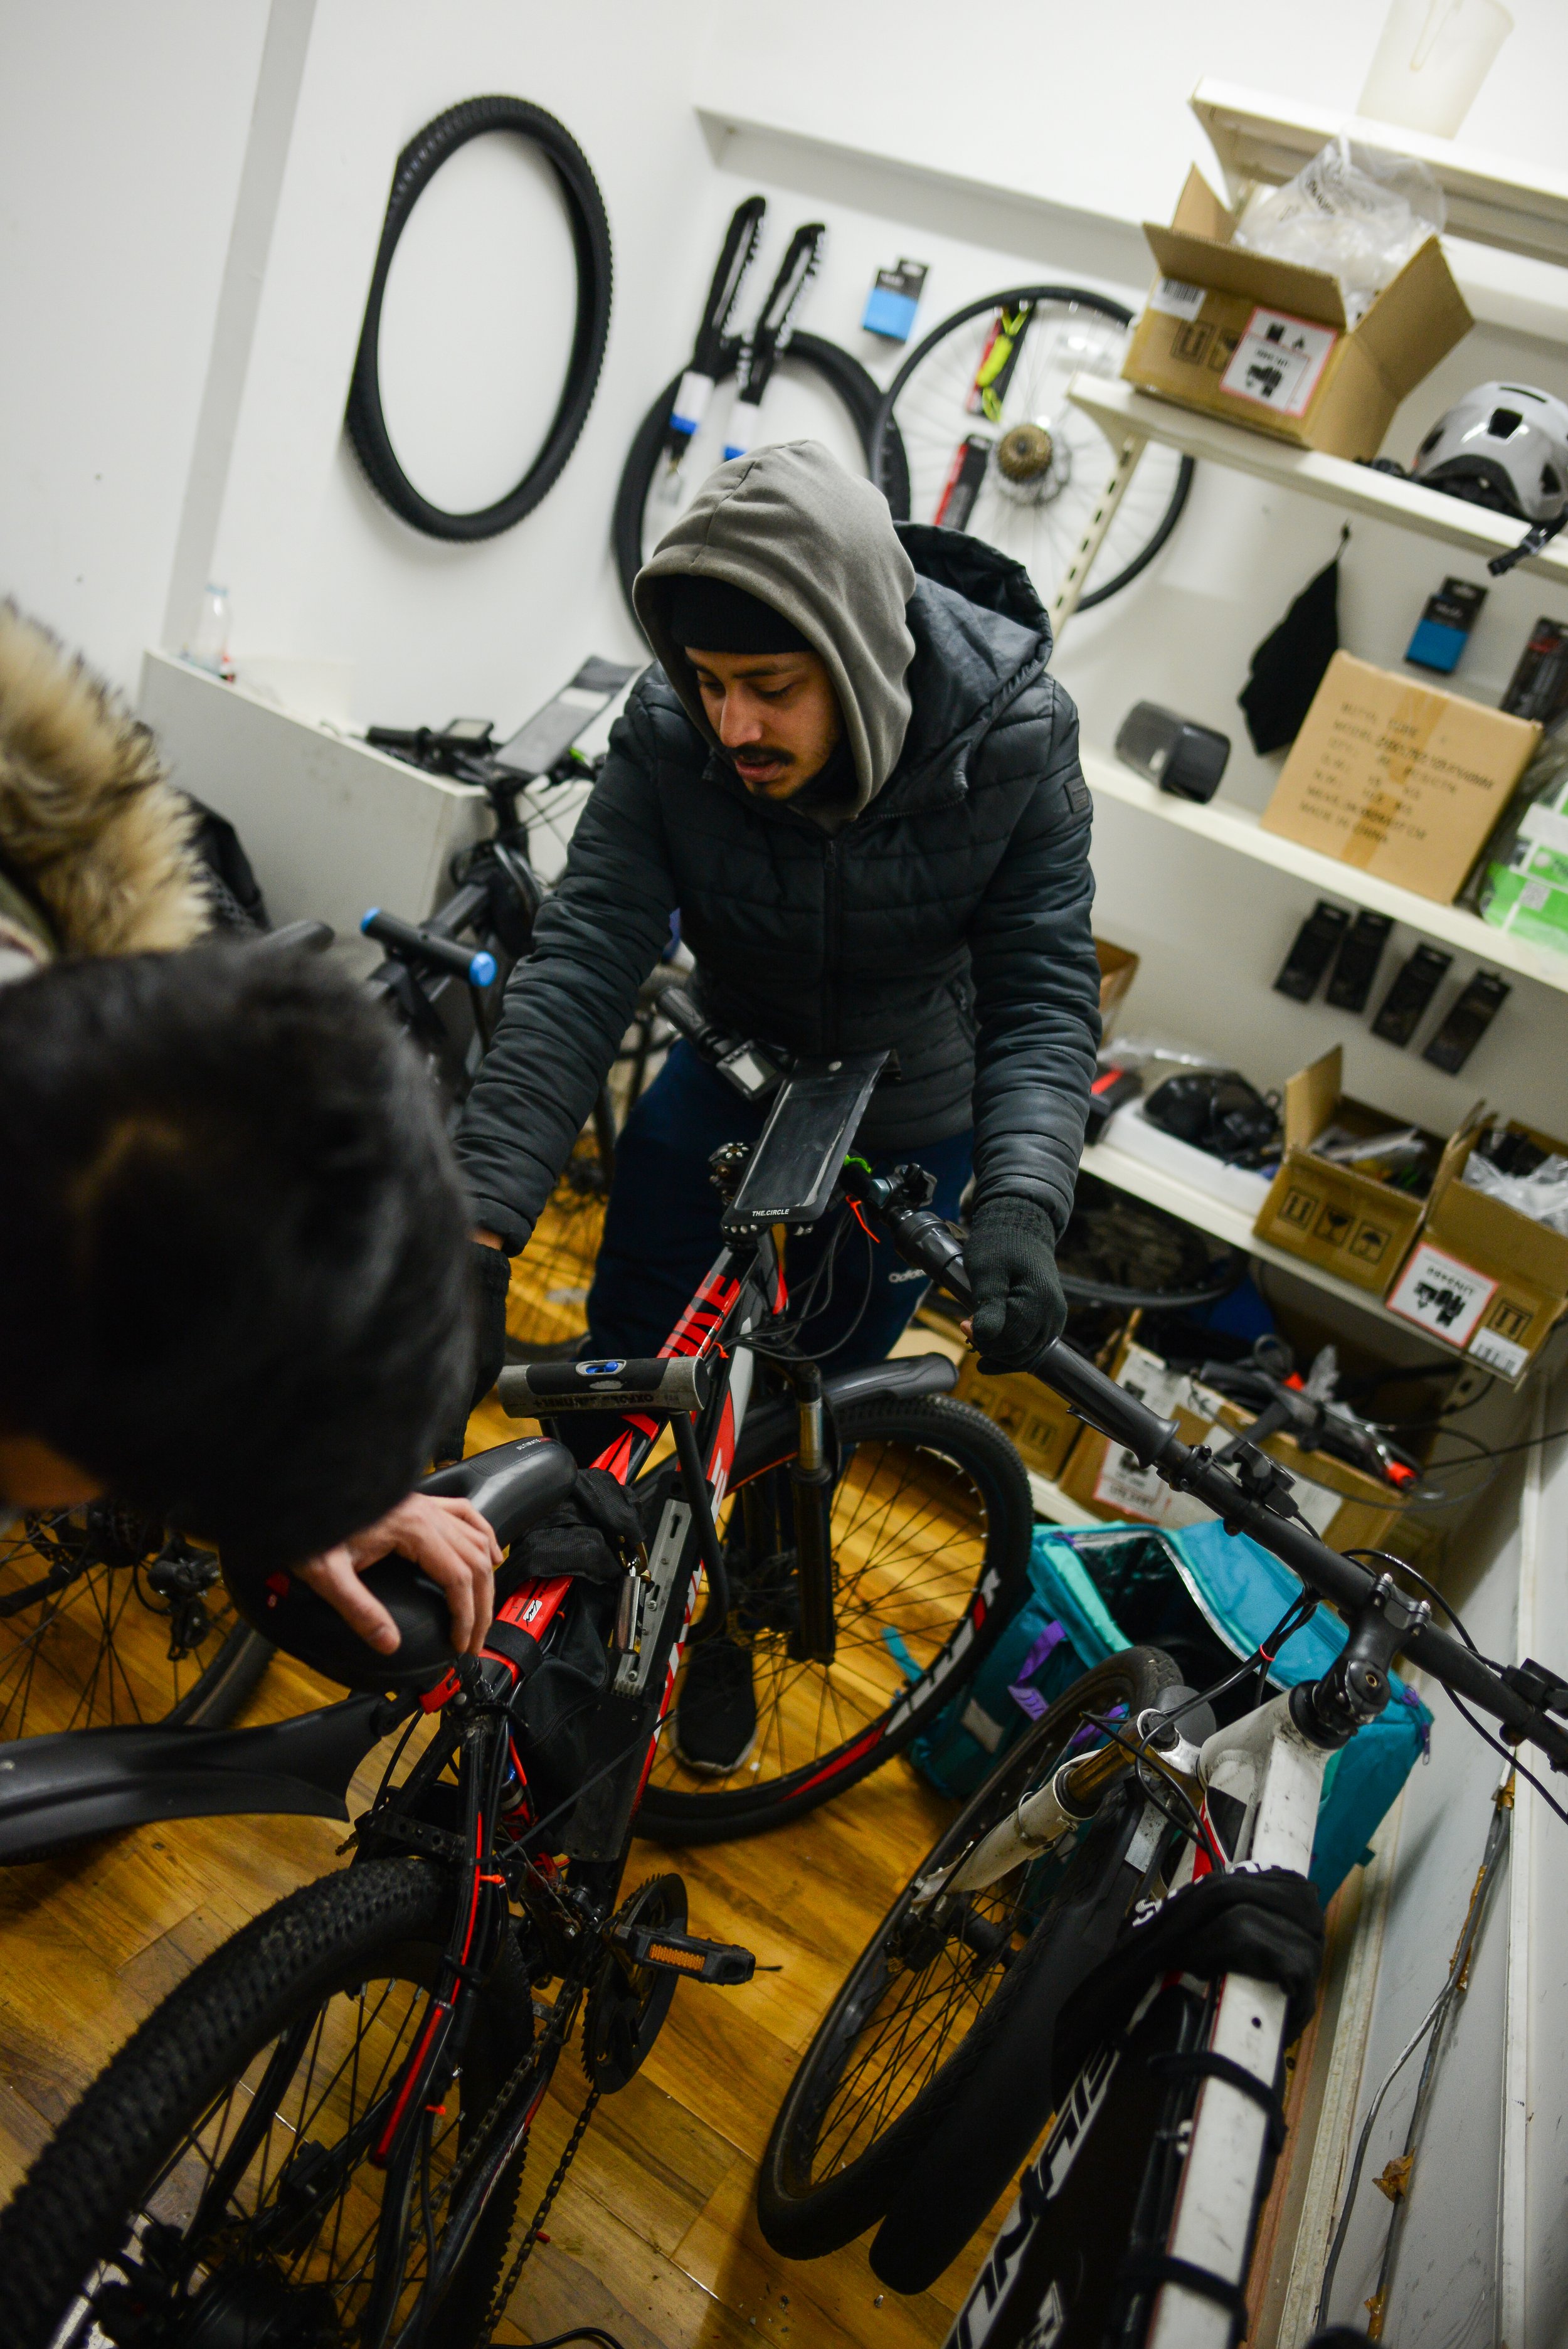  Faruk, 27, the owner of ‘Whitechapel Bikes’ garage and mechanics, helps Nurul to fix his bike 